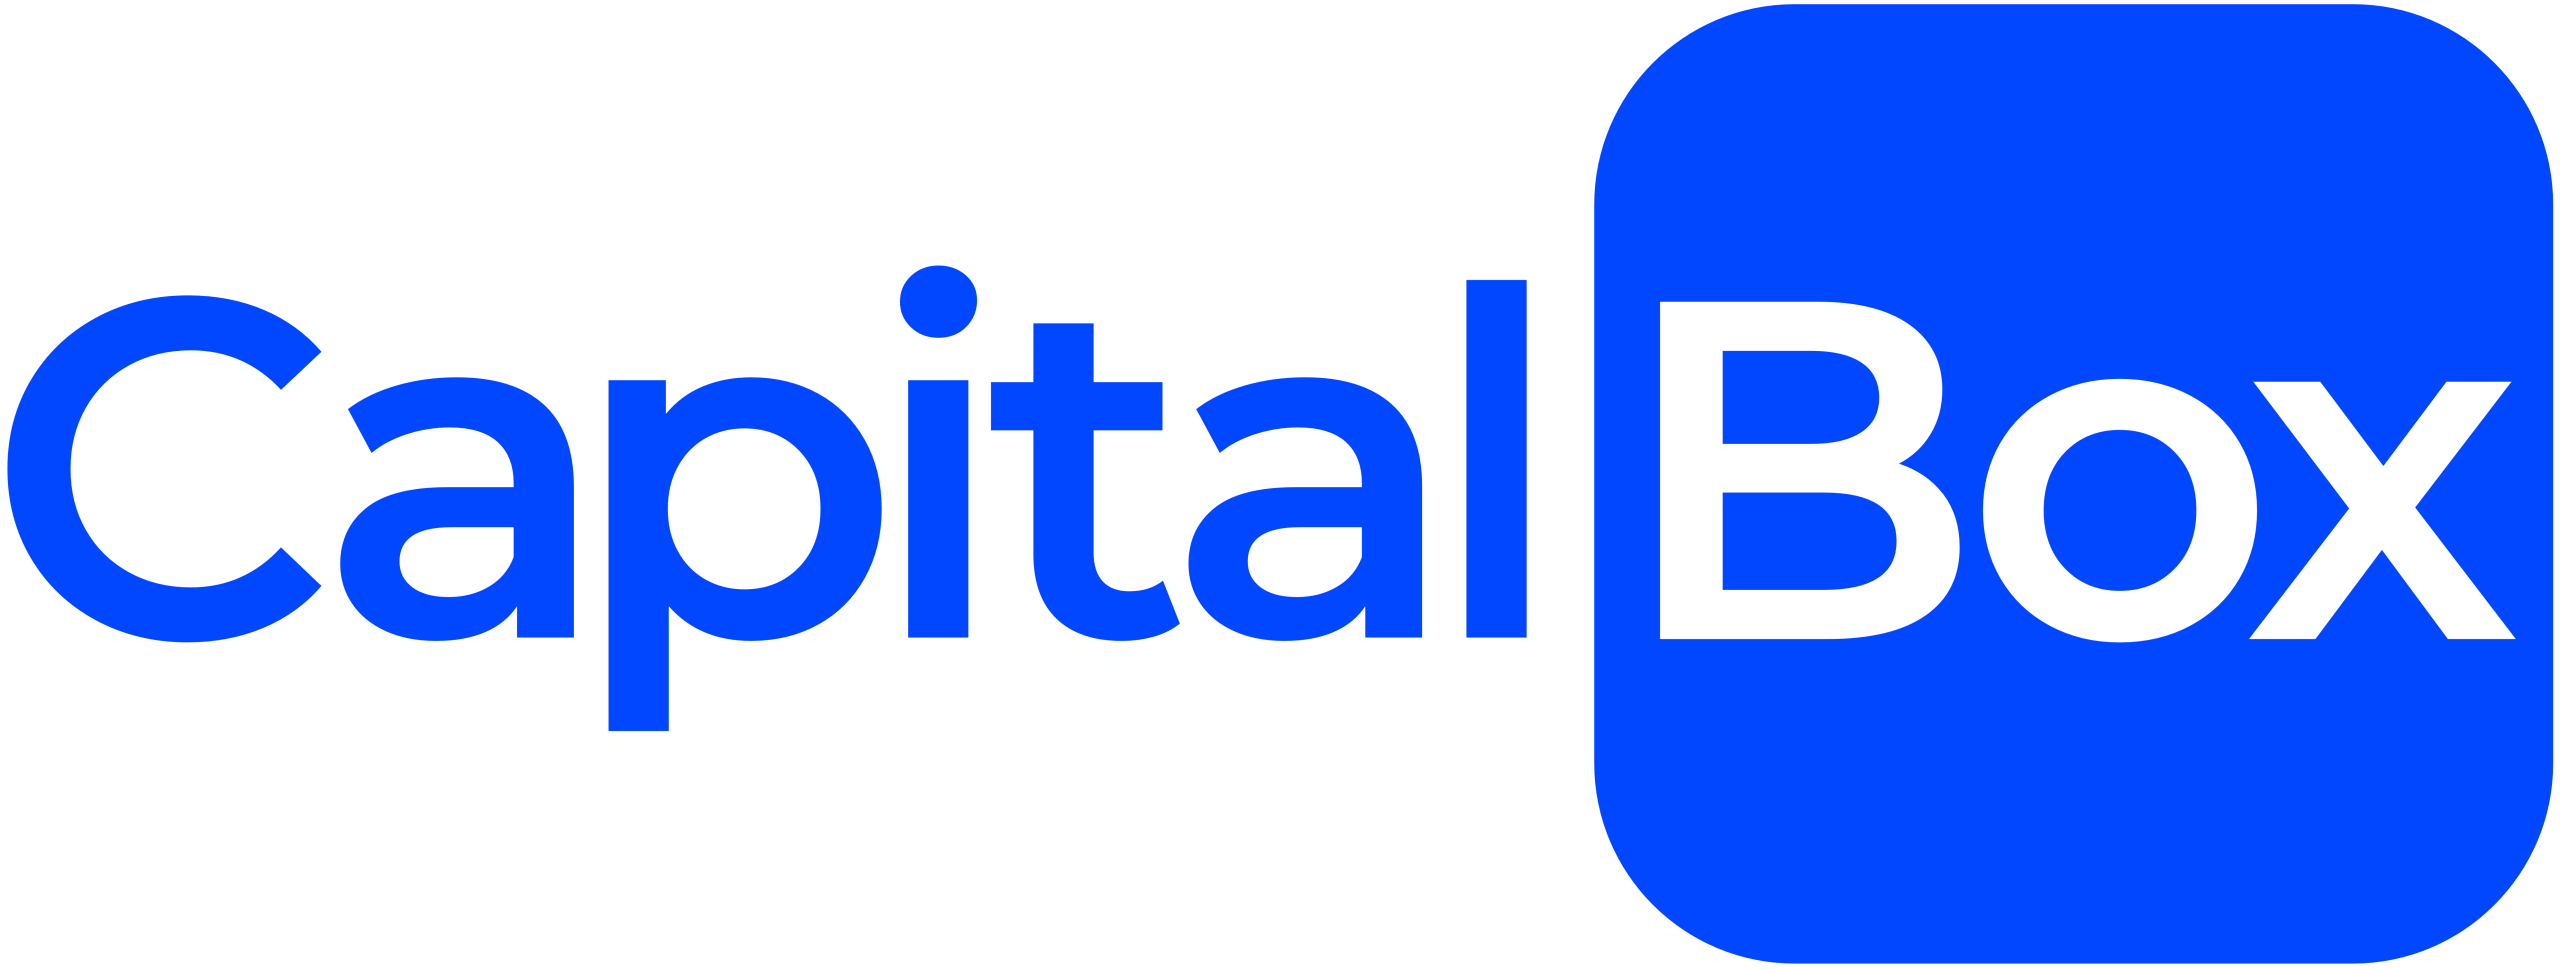 capitalbox logo